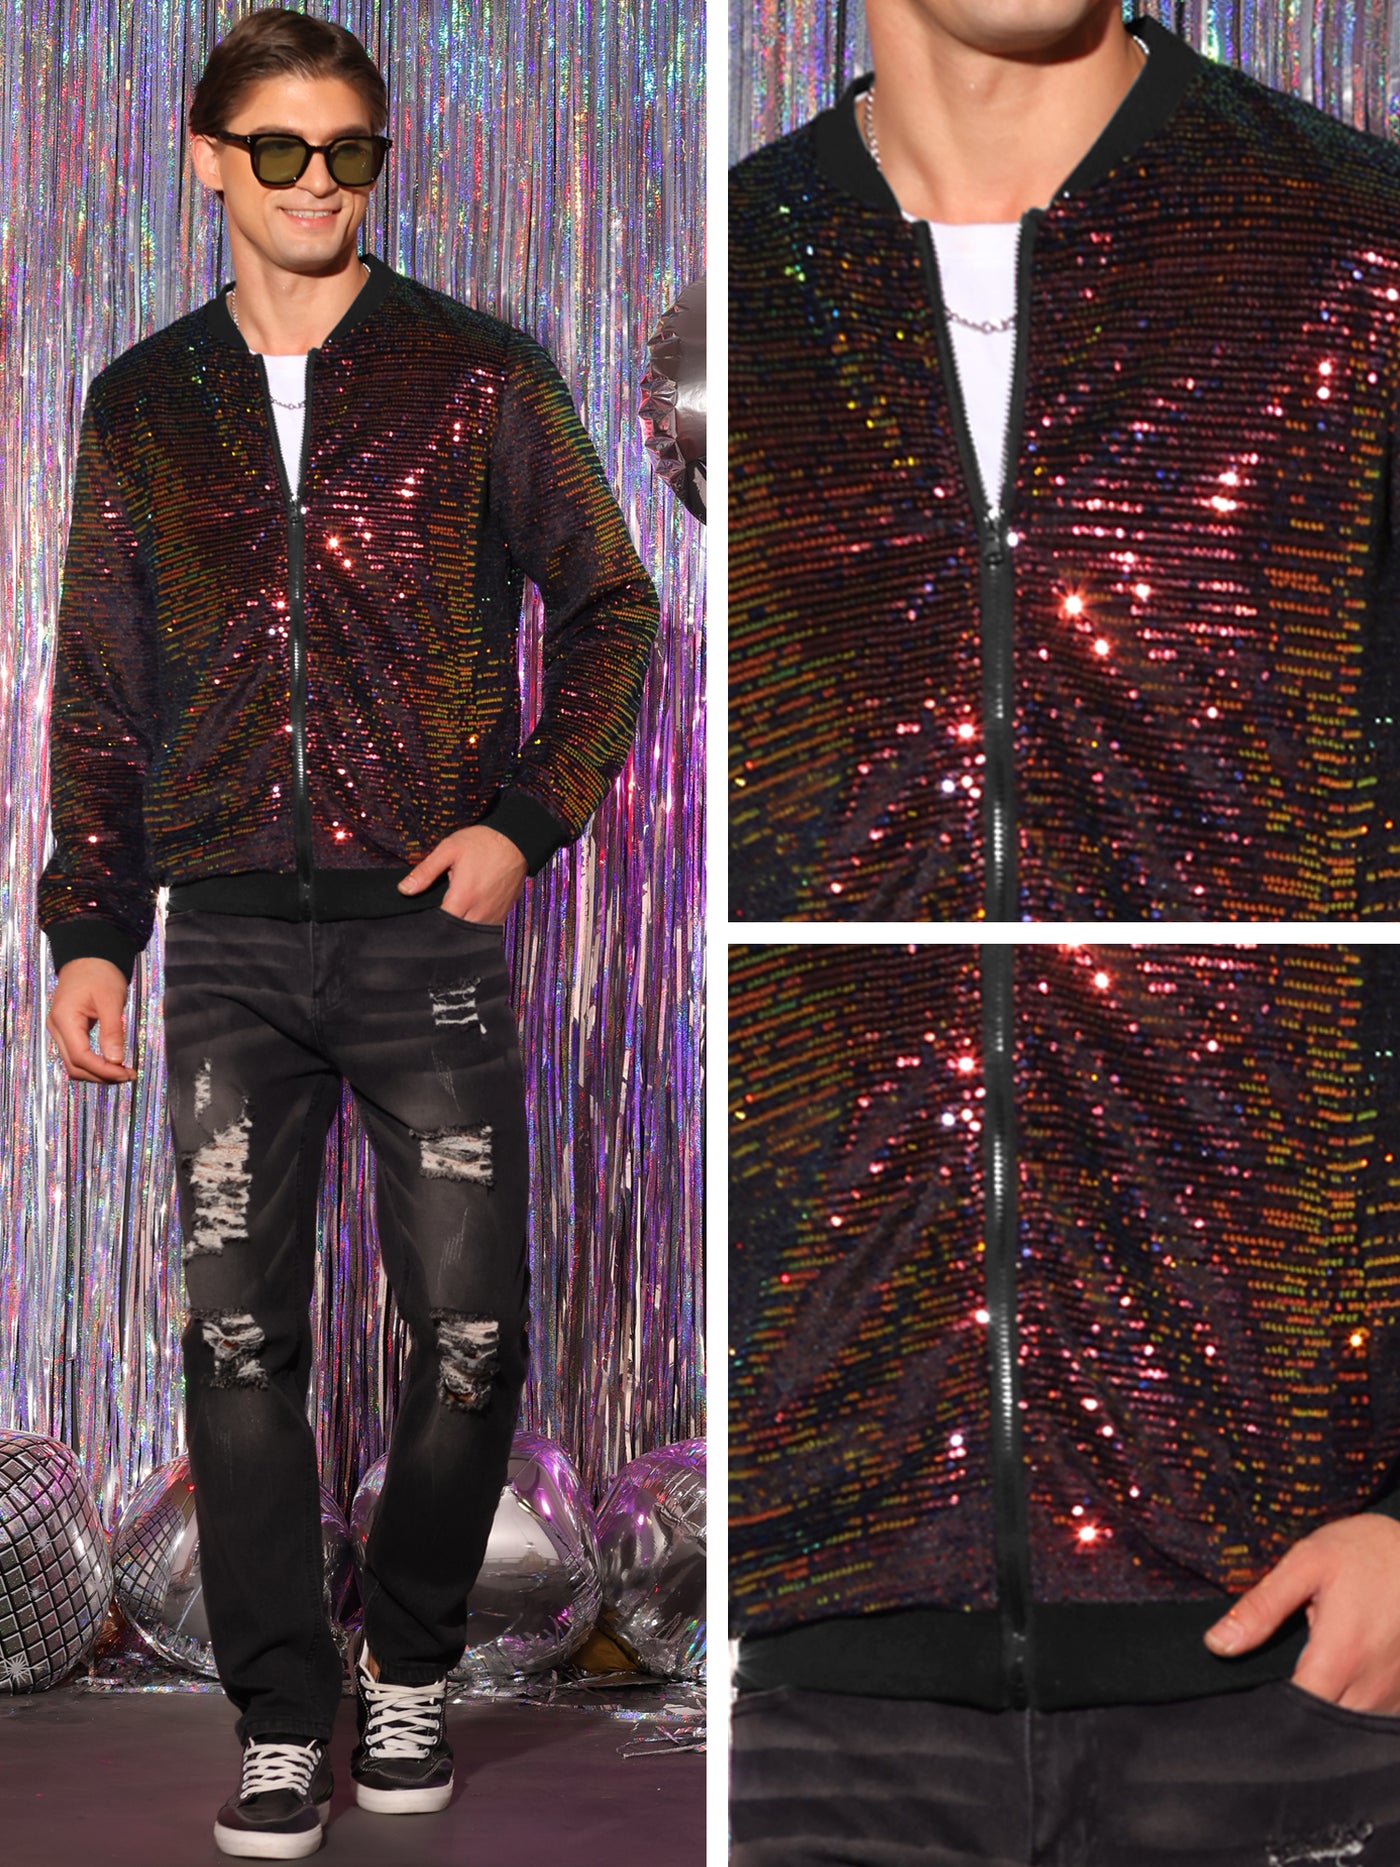 Bublédon Sequin Zipper Long Sleeves Party Disco Shiny Bomber Jacket